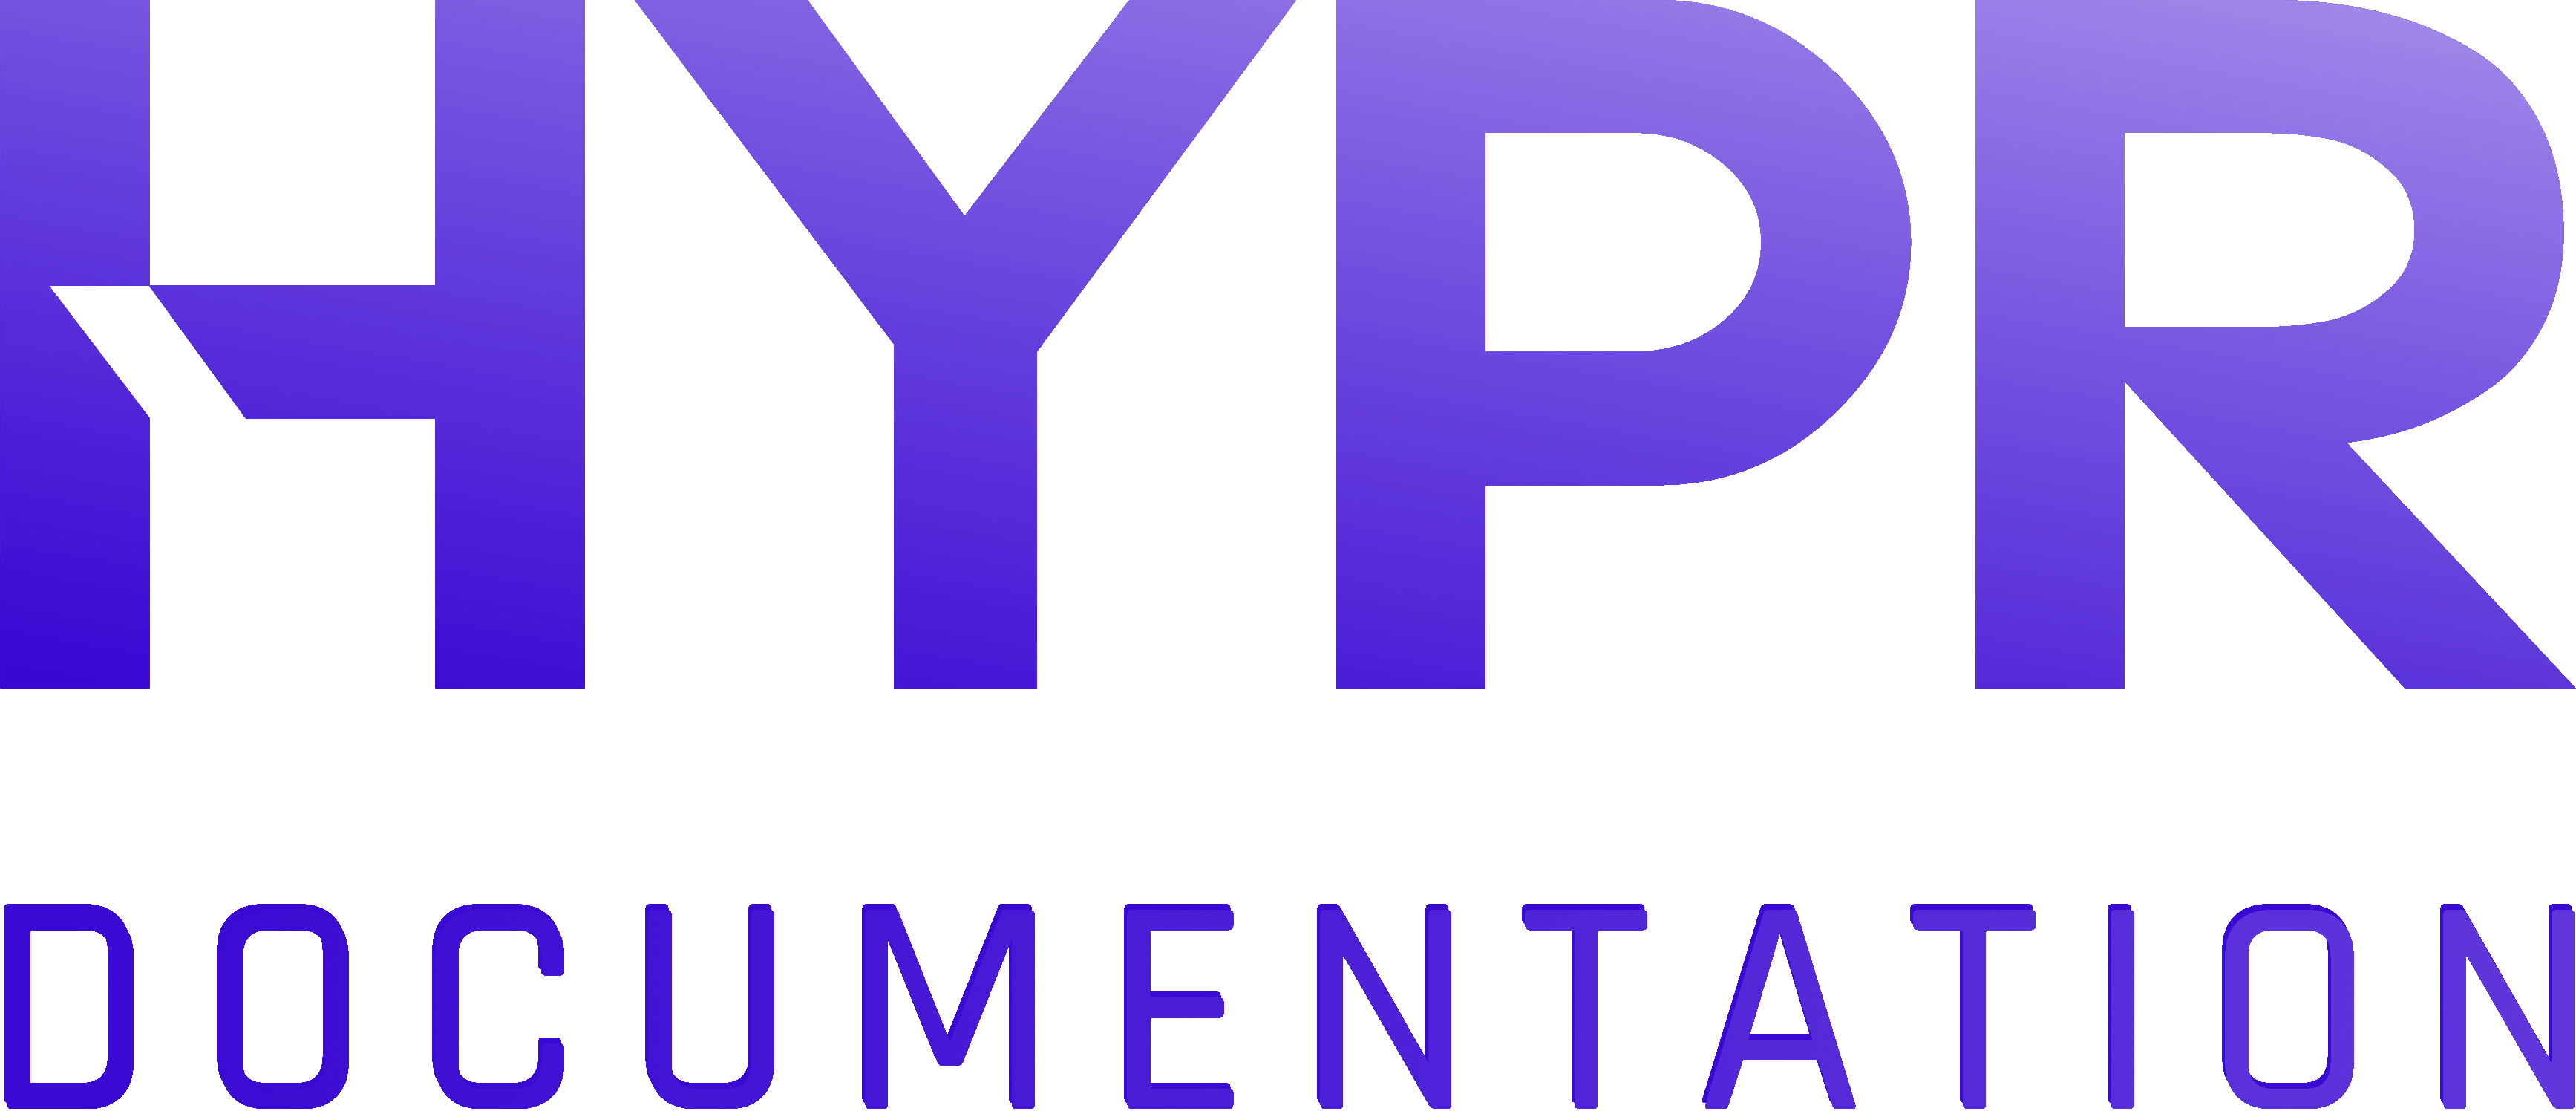 HYPR Identity Assurance Platform